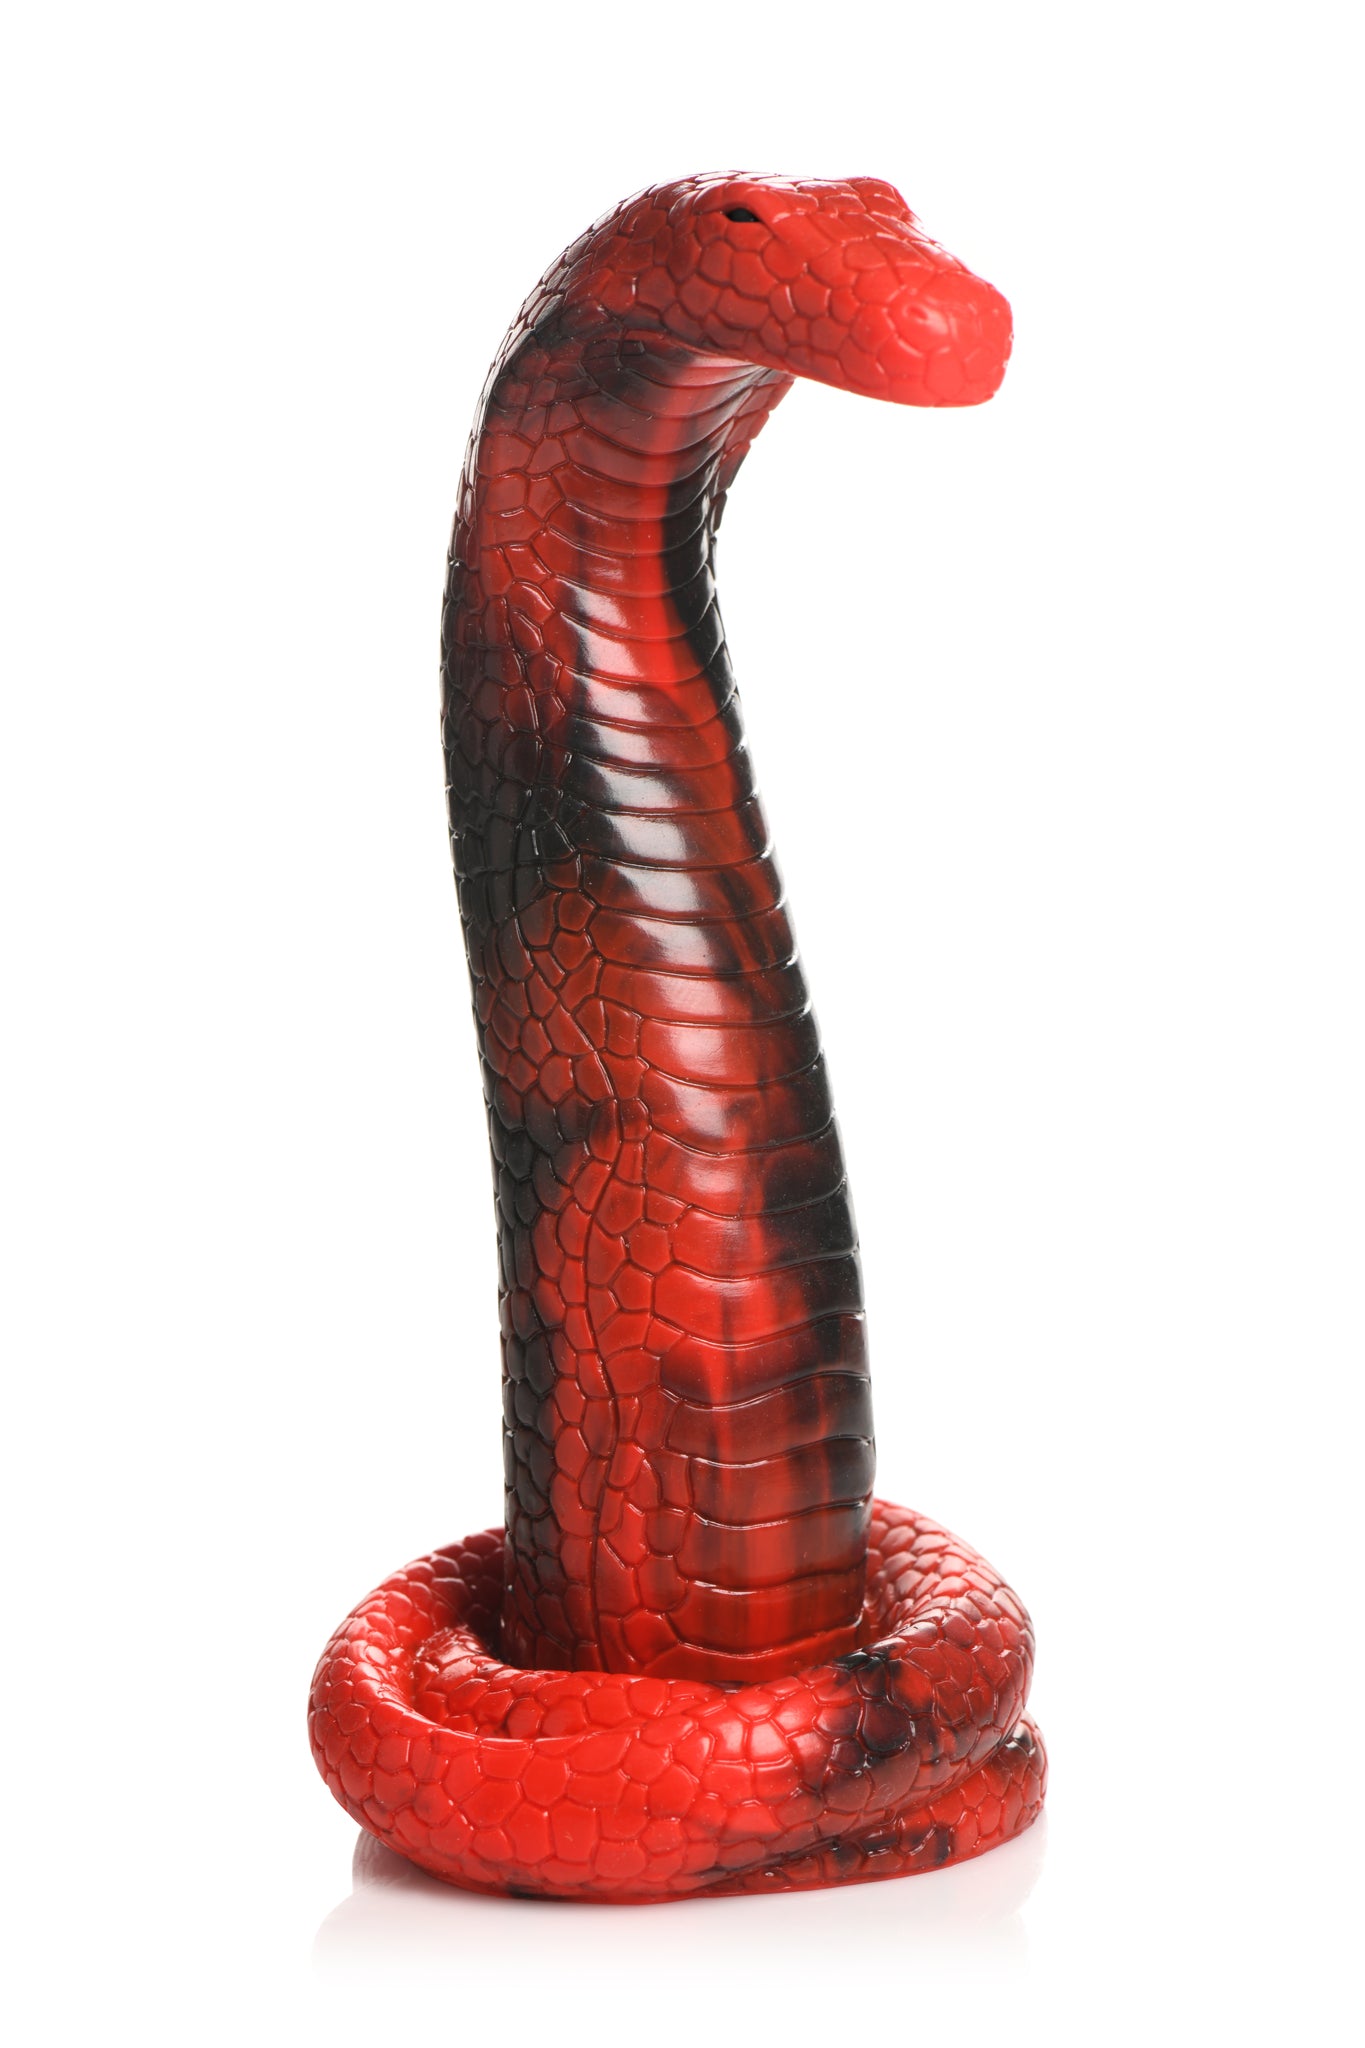 King Cobra Fantasy Dildo made of Silicone by Creature Cocks - 10-Inch/Medium